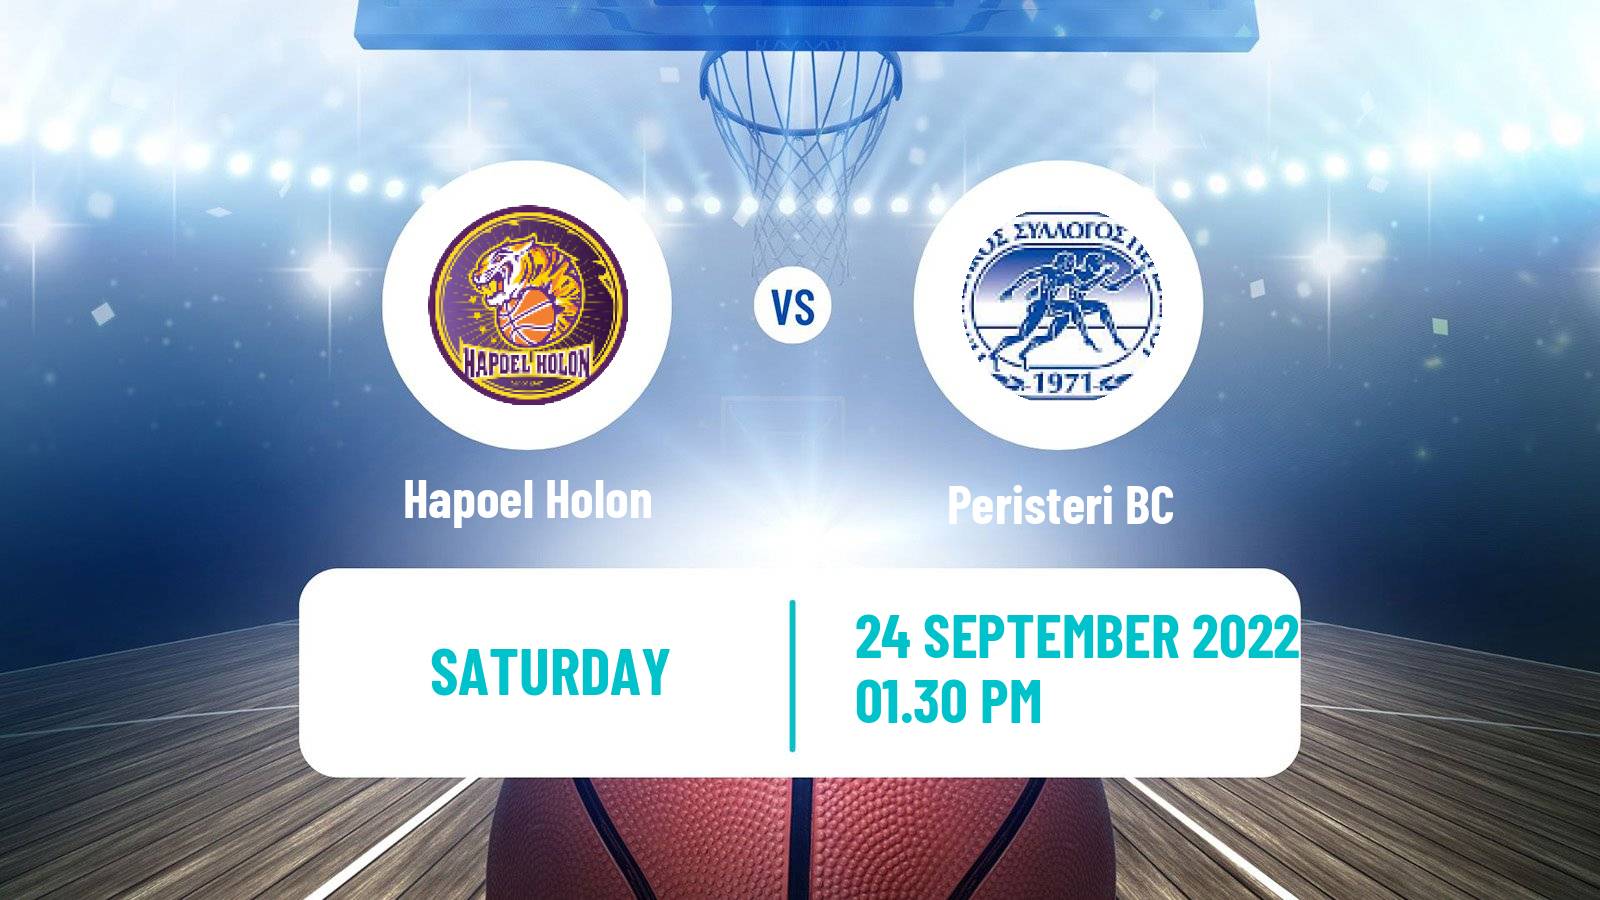 Basketball Club Friendly Basketball Hapoel Holon - Peristeri BC